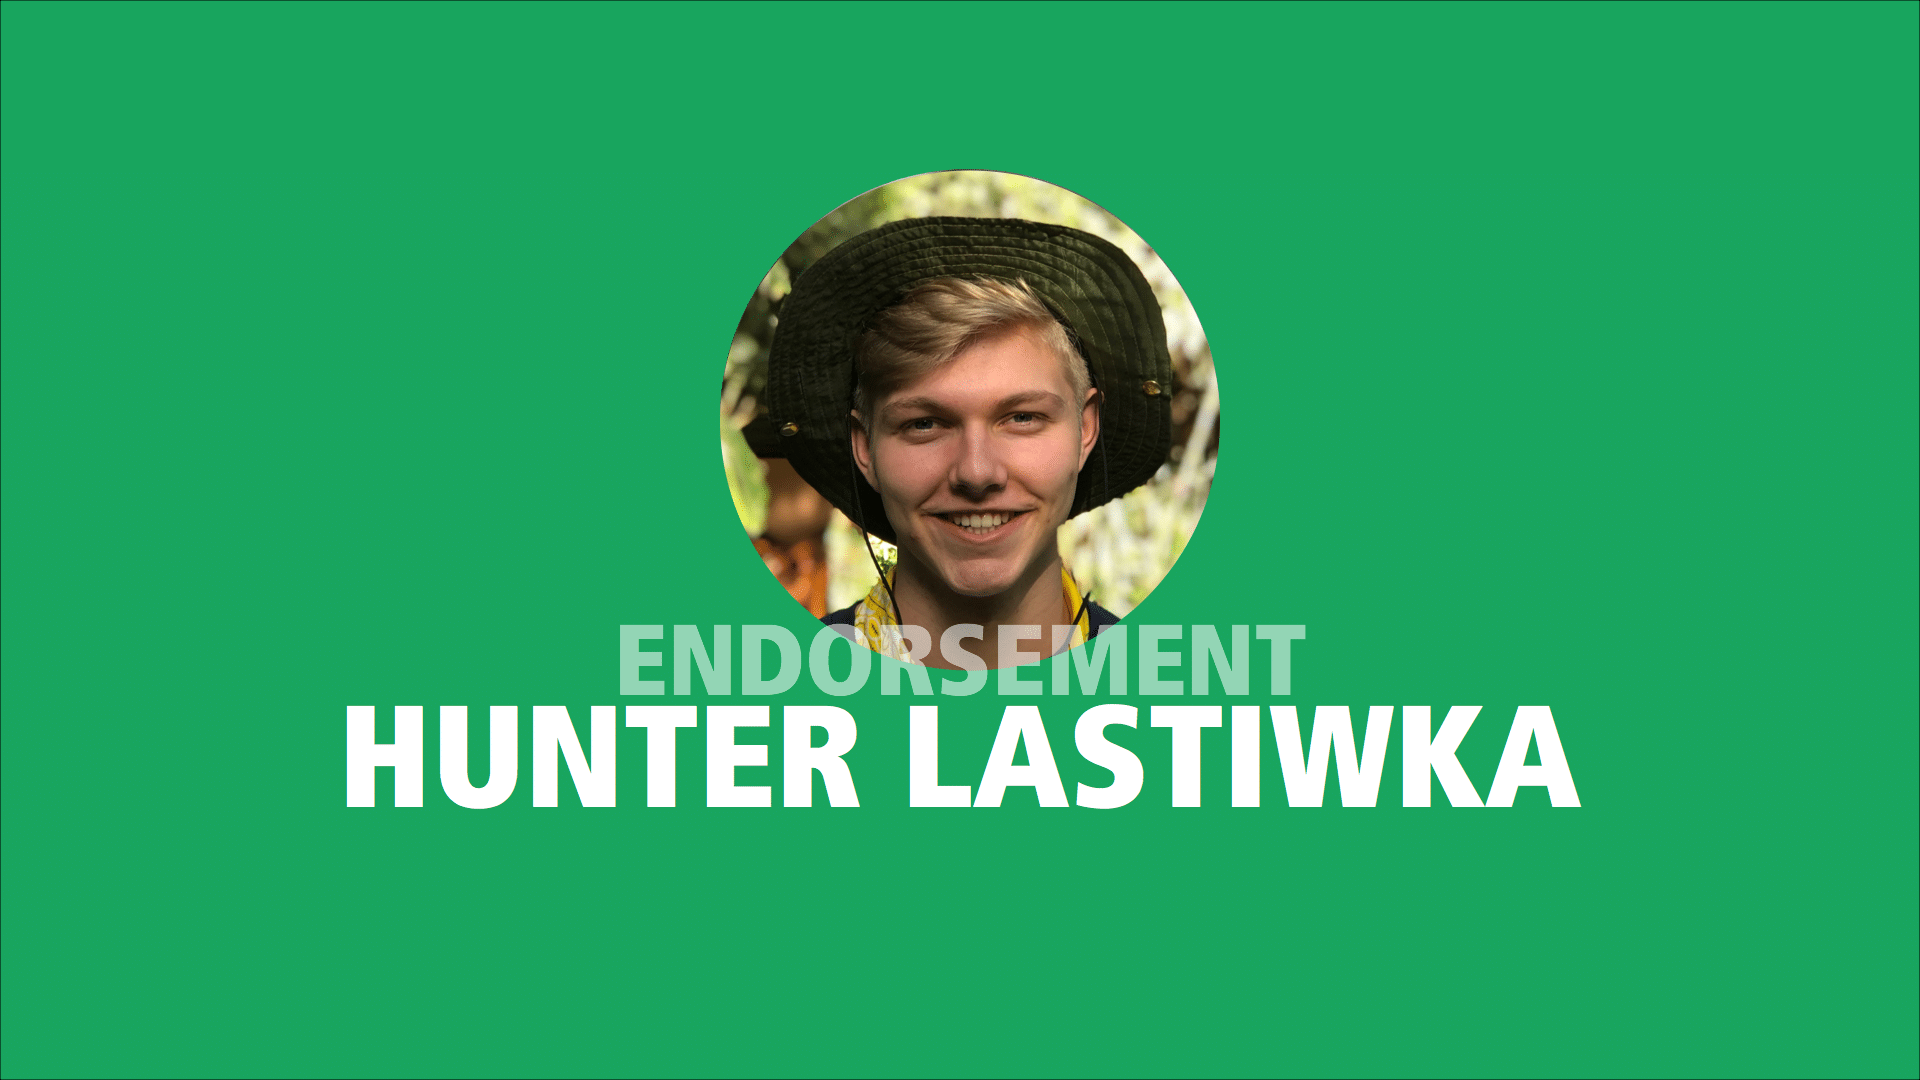 Hunter Lastiwka endorses Adam Olsen